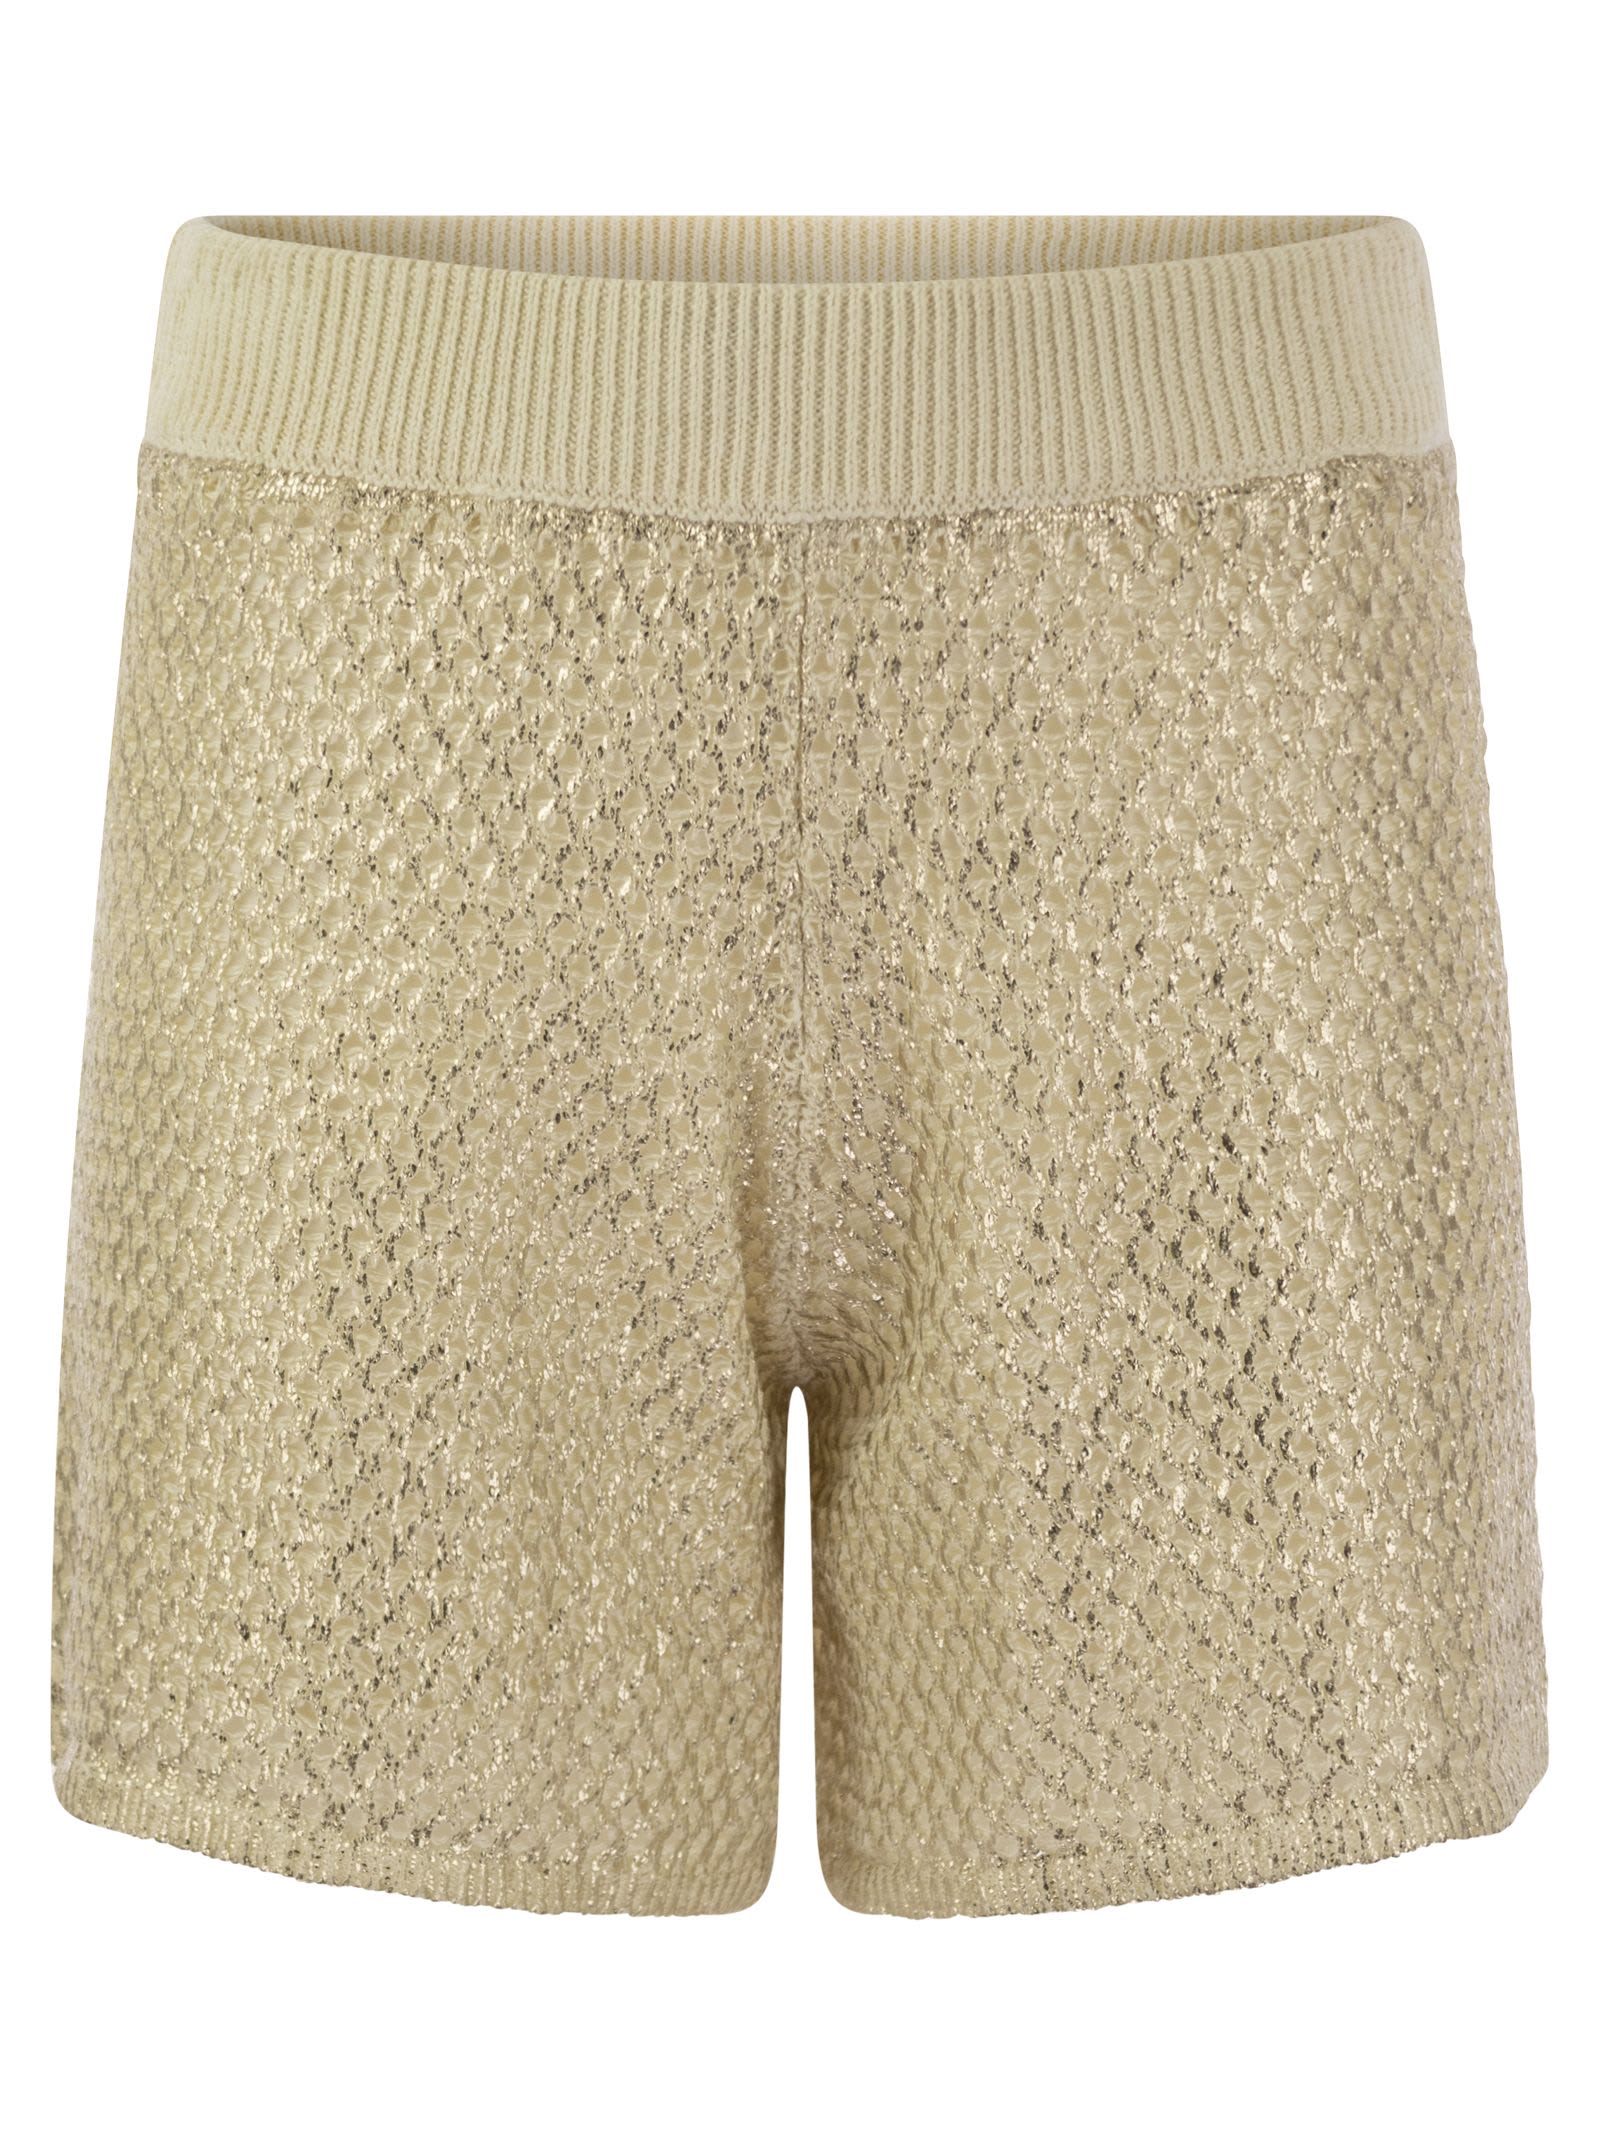 Shorts In Laminated Linen-cotton Mélange Yarn